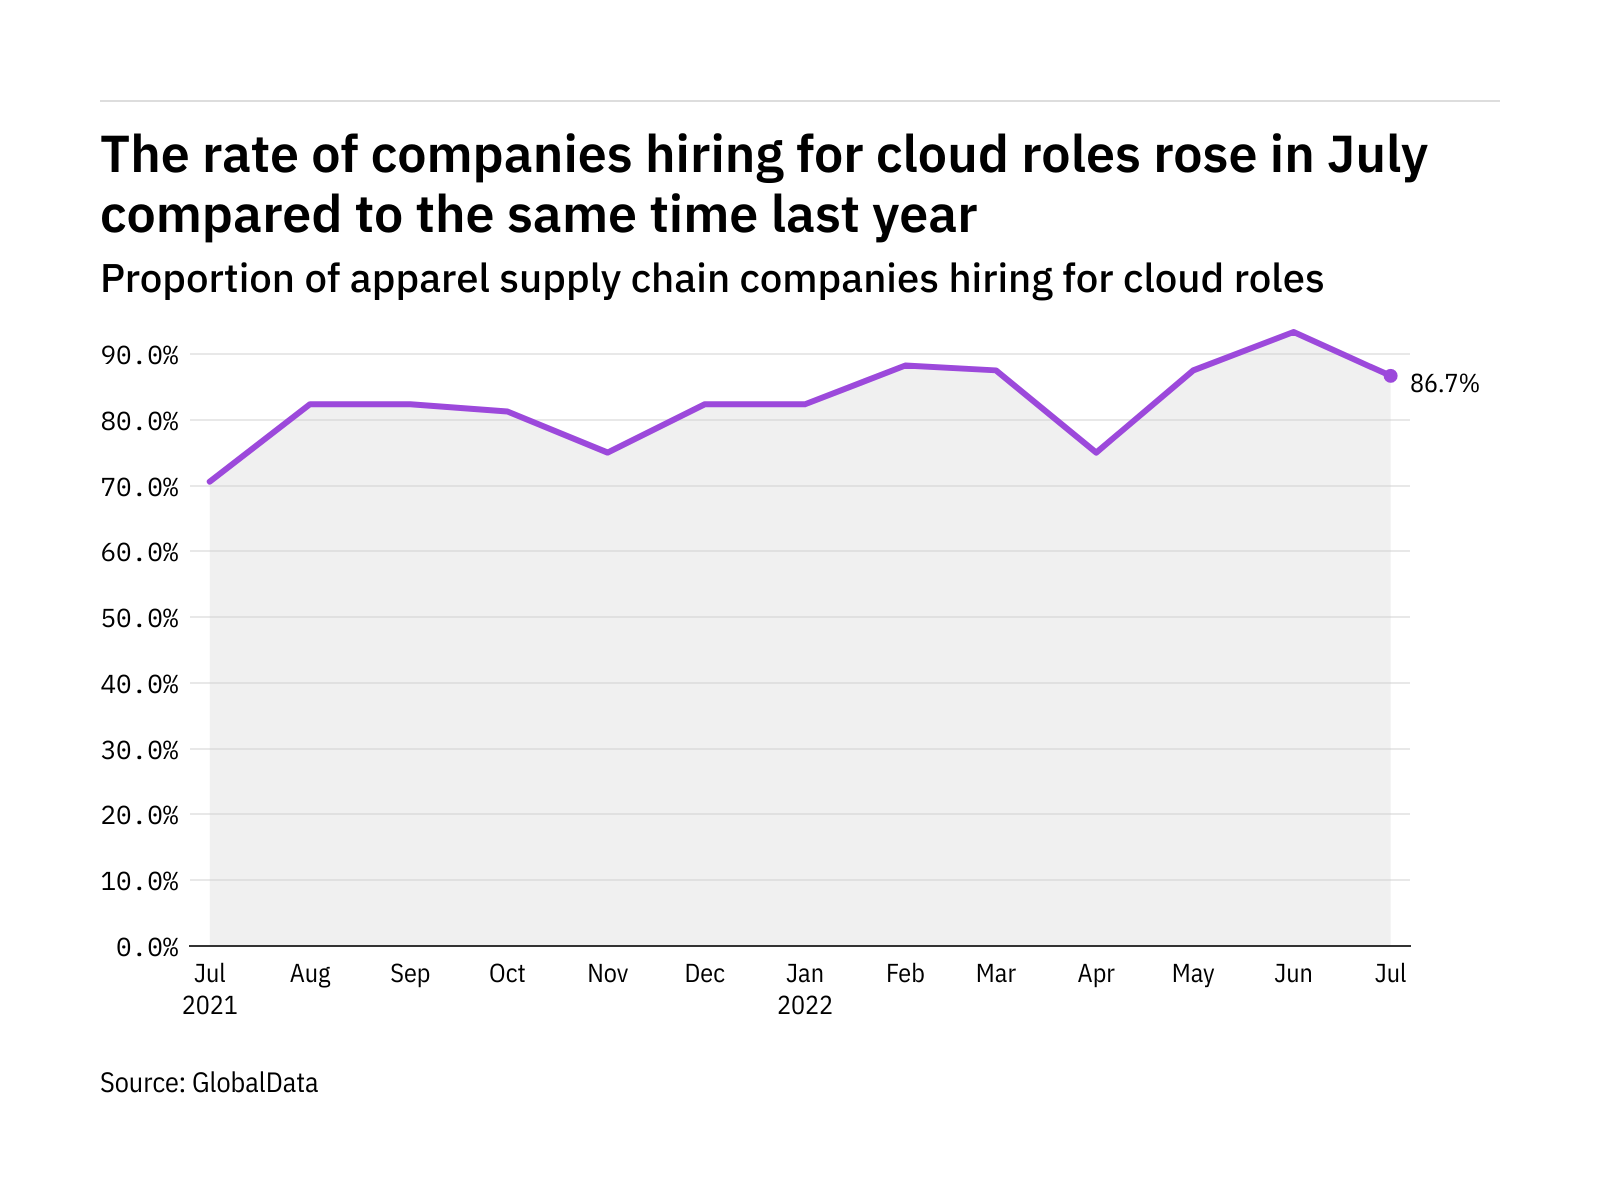 Cloud hiring levels in apparel rose in July